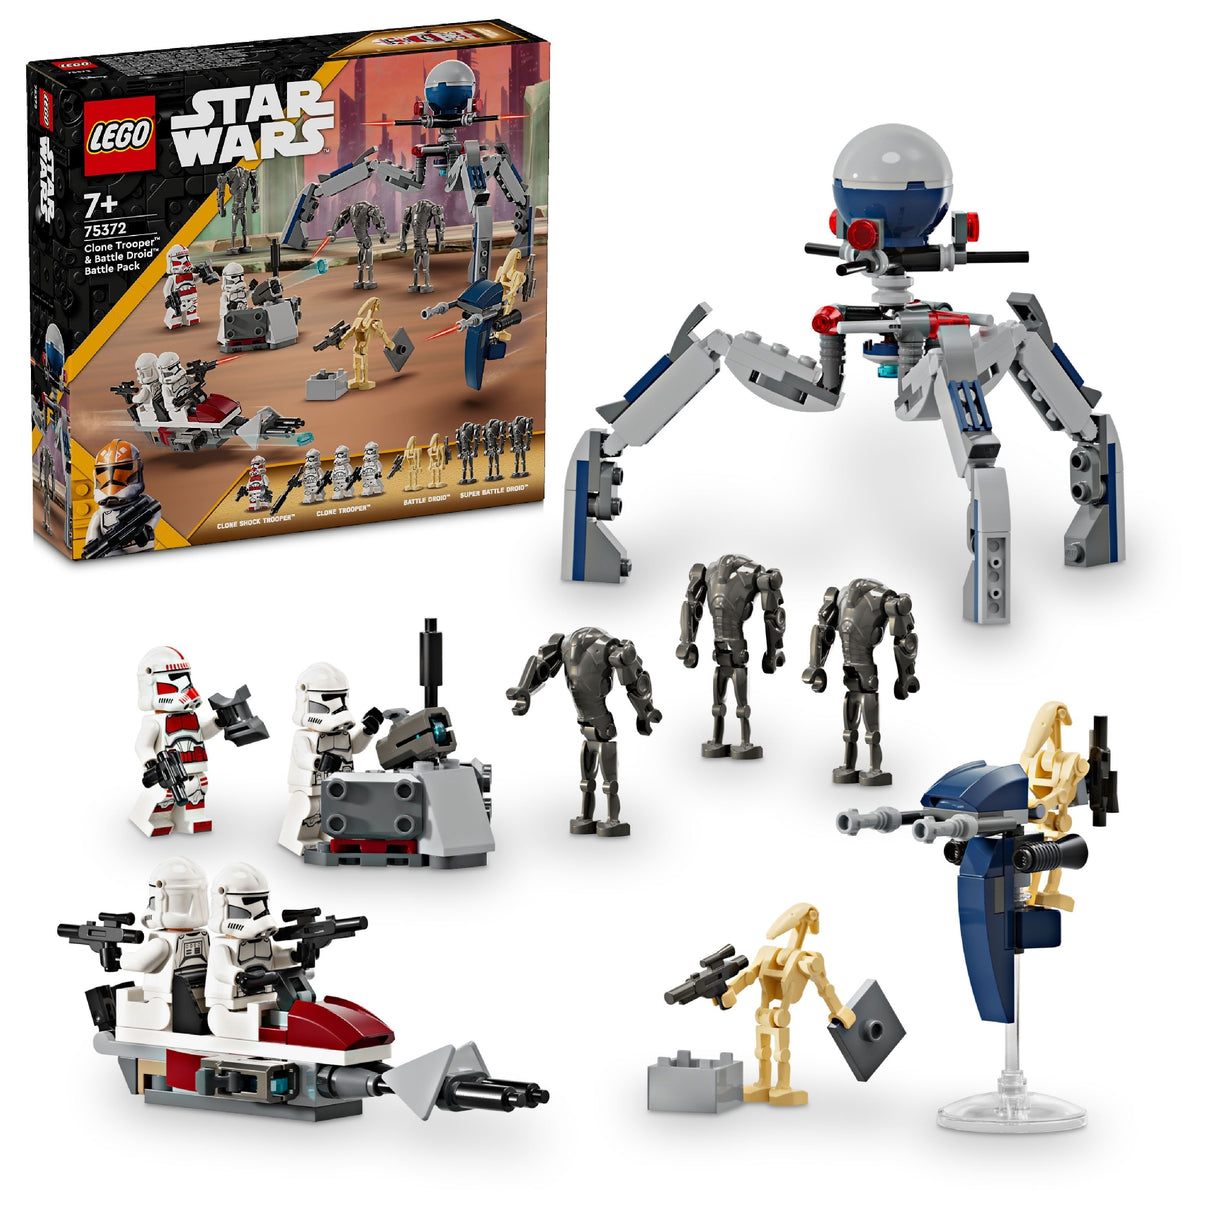 LEGO STAR WARS CLONE TROOPER & DROID BATTLE PACK 75372 AGE: 7+